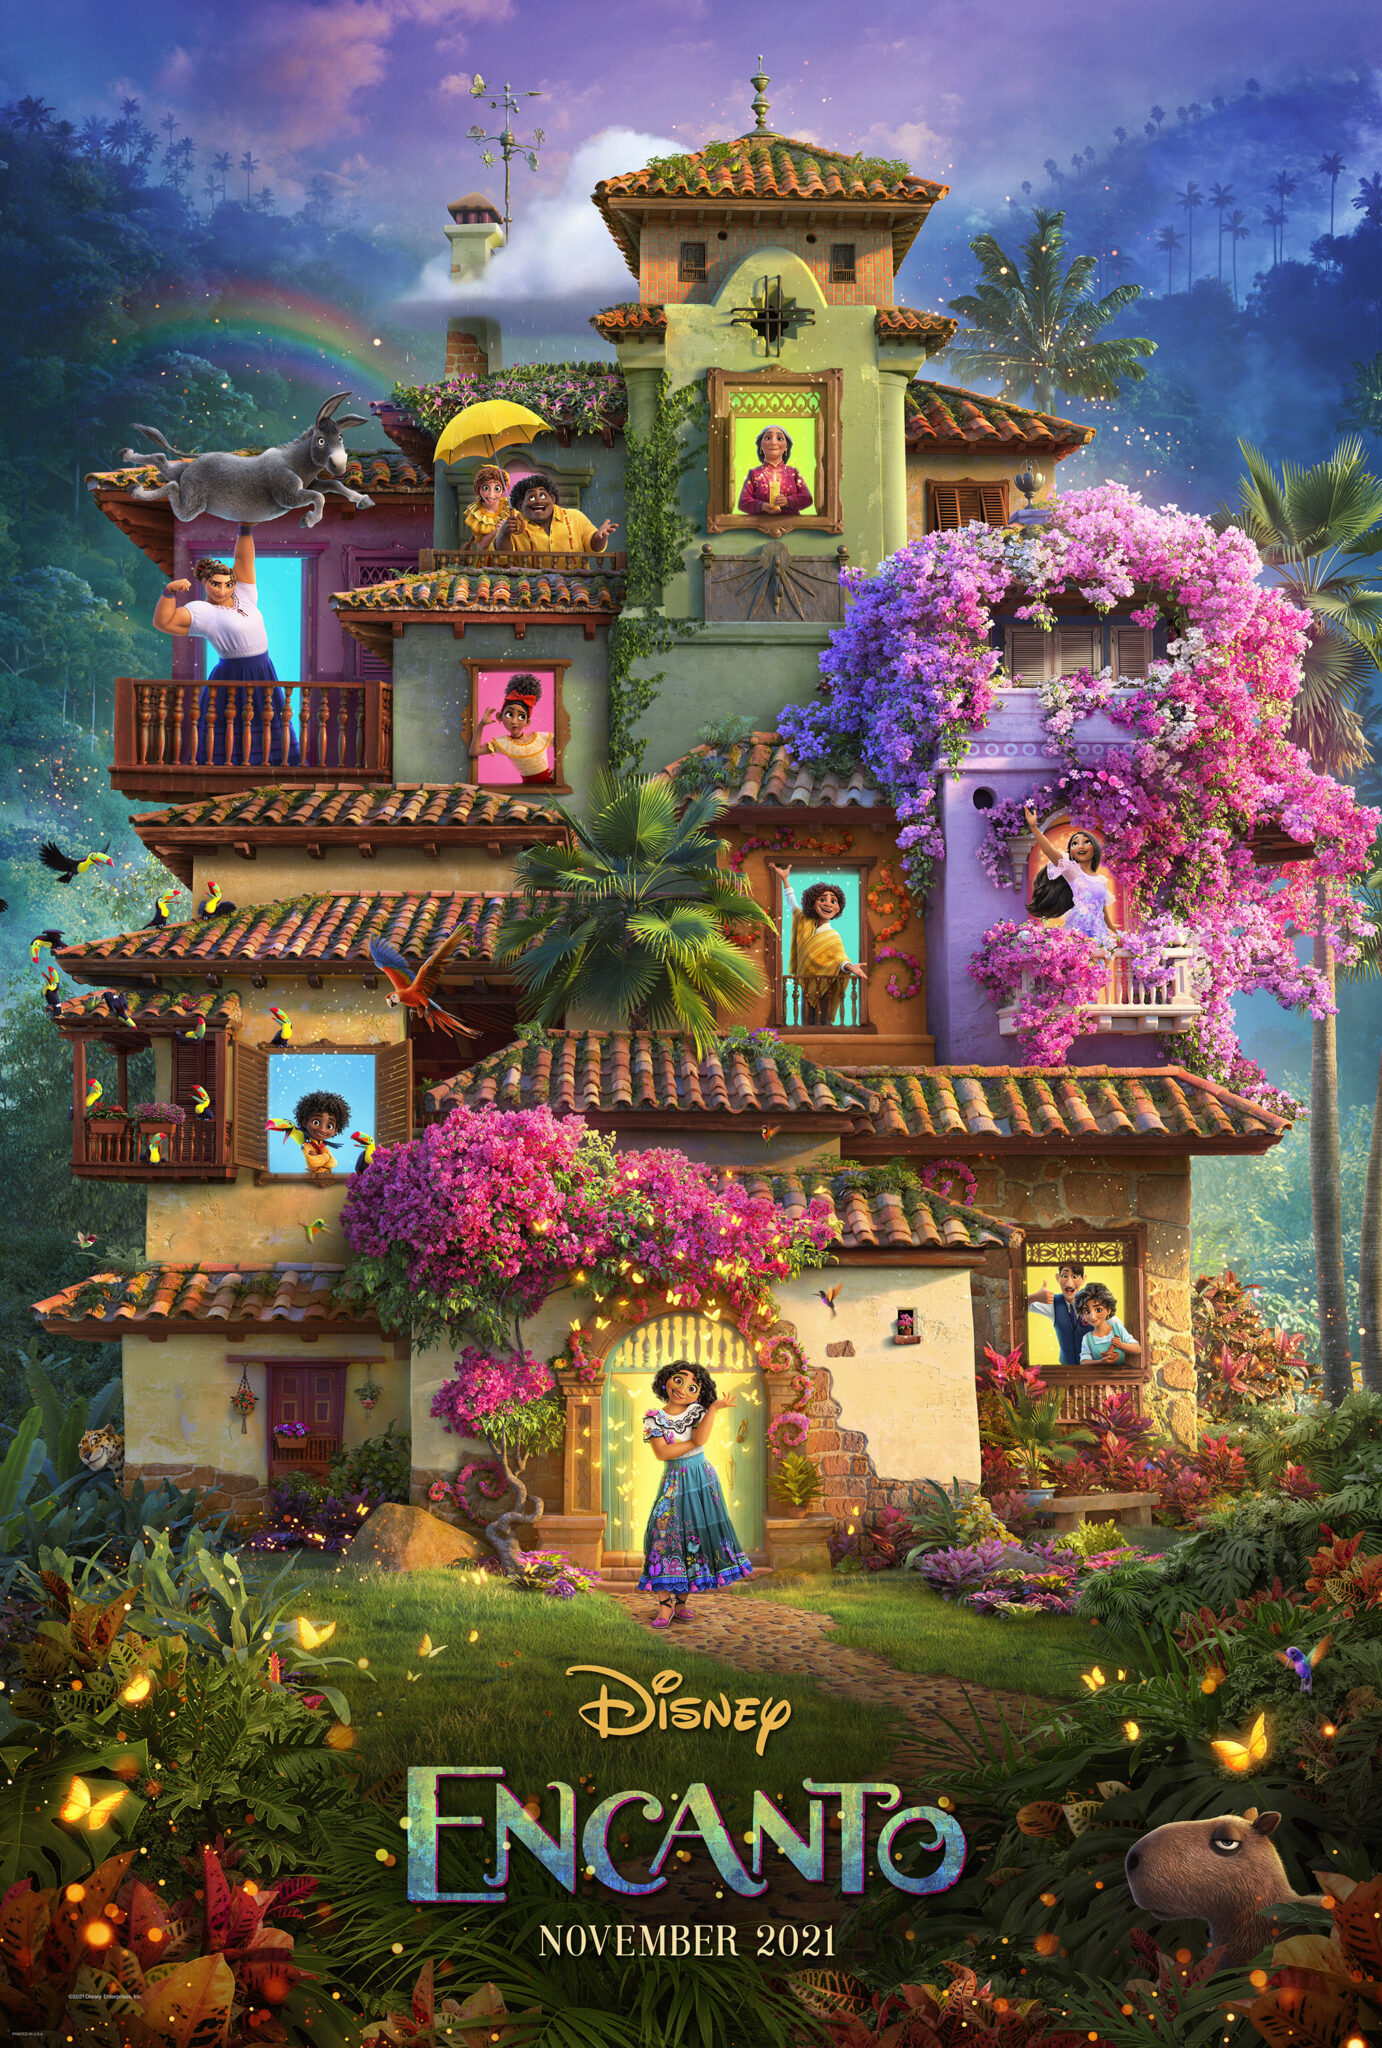 Introducing Walt Disney Animation Studios’ All-New Original Film “Encanto” #Encanto